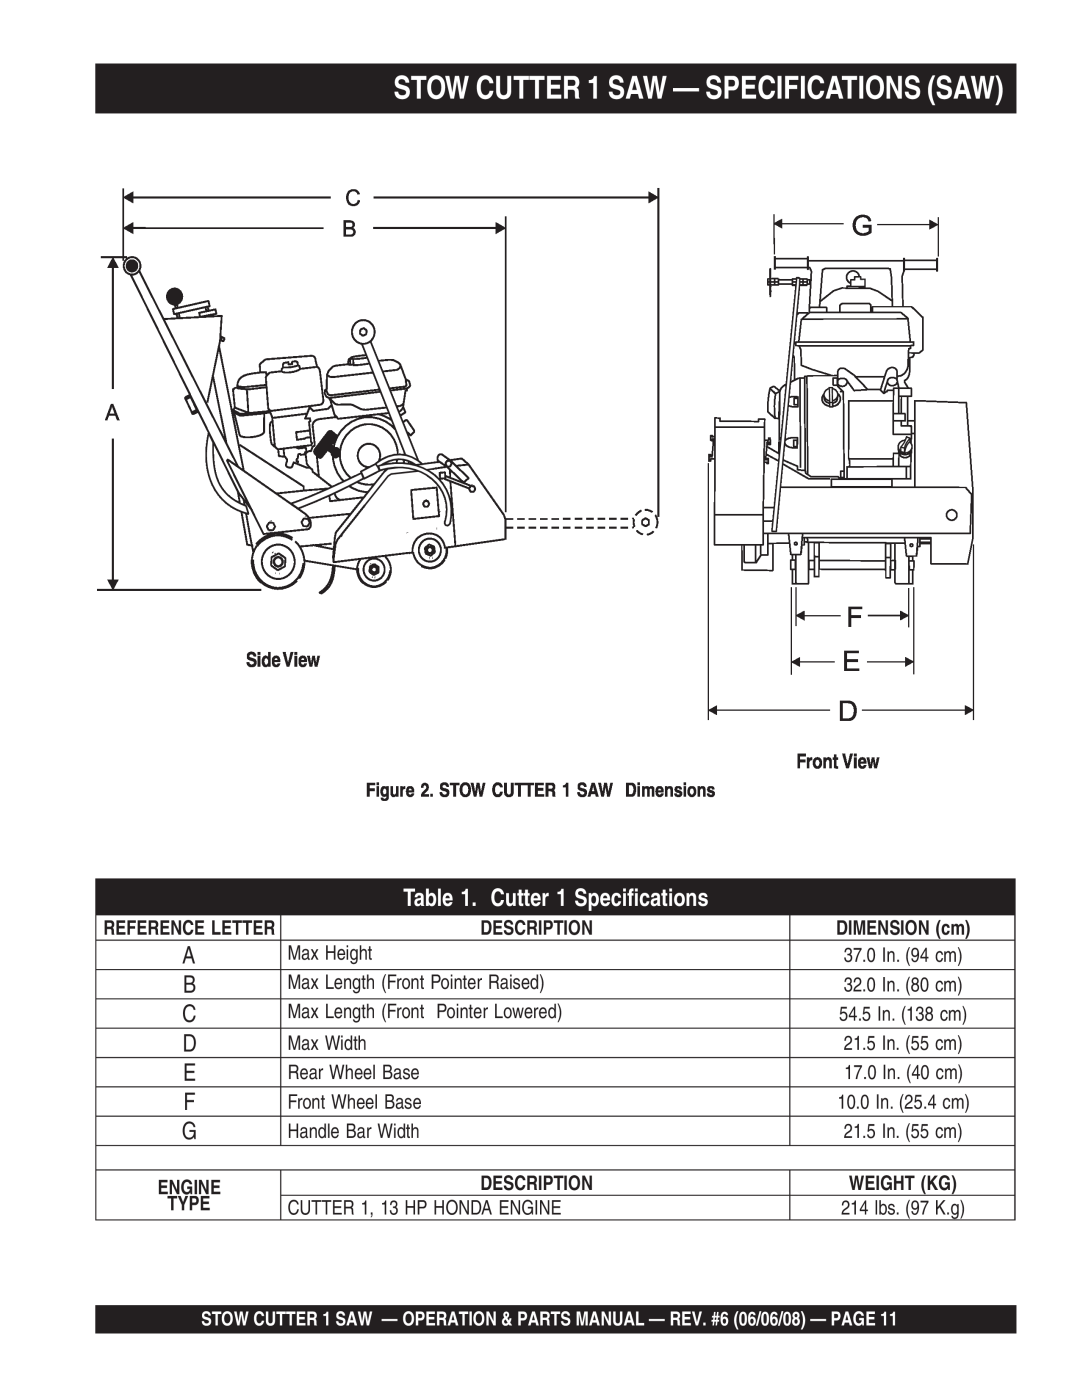 Multiquip CD613H18 (Honda GX390 Gasoline Engine) STOW CUTTER 1 SAW - SPECIFICATIONS SAW, Cutter 1 Specifications, G F E D 